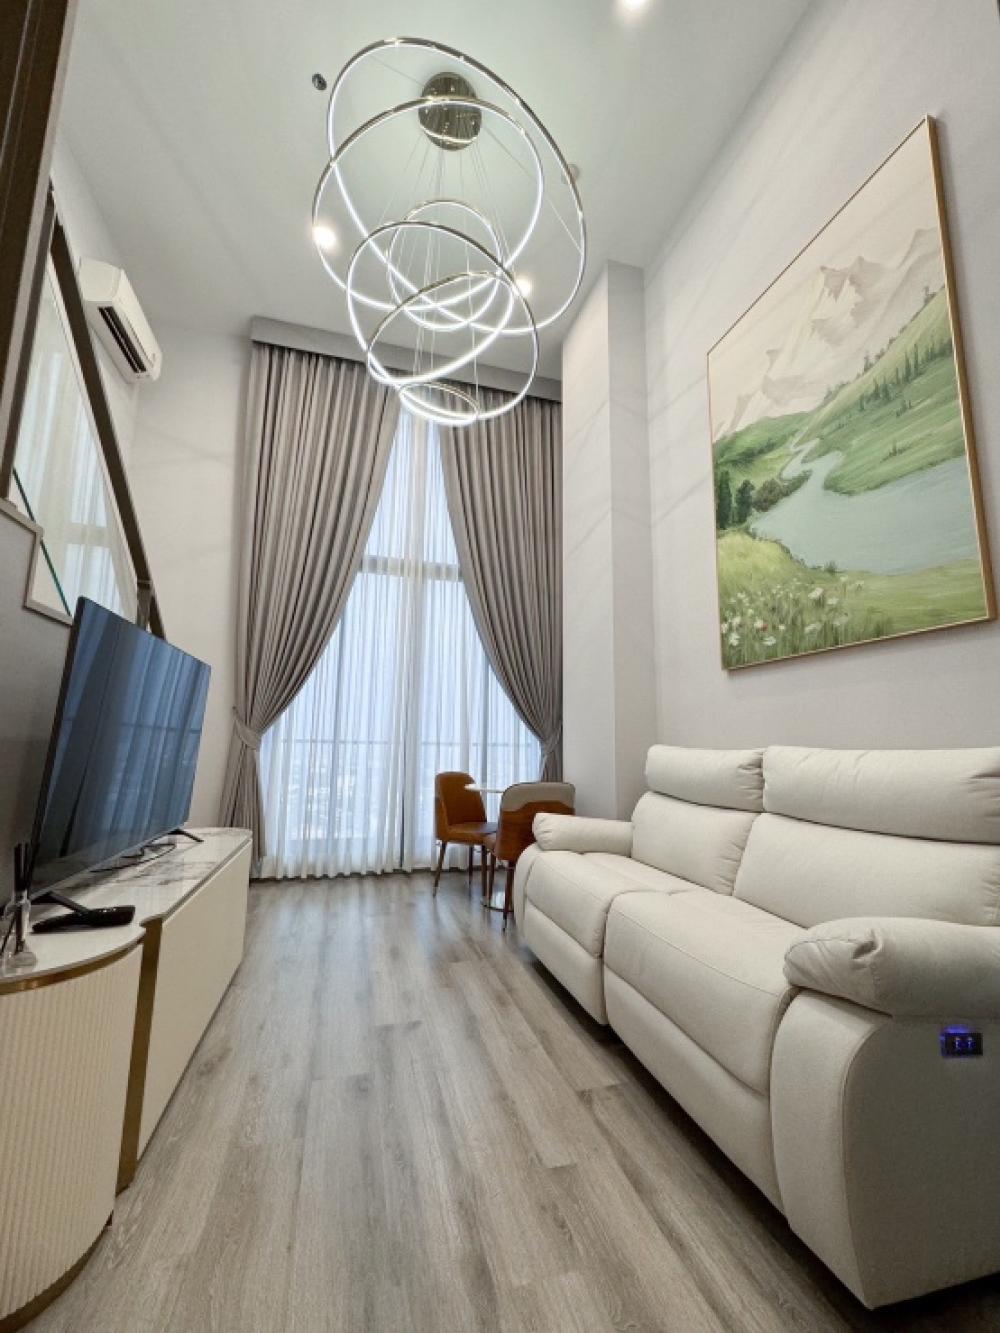 For RentCondoKasetsart, Ratchayothin : Condo for rent, Miti Chiva, duplex room, high floor, private unit